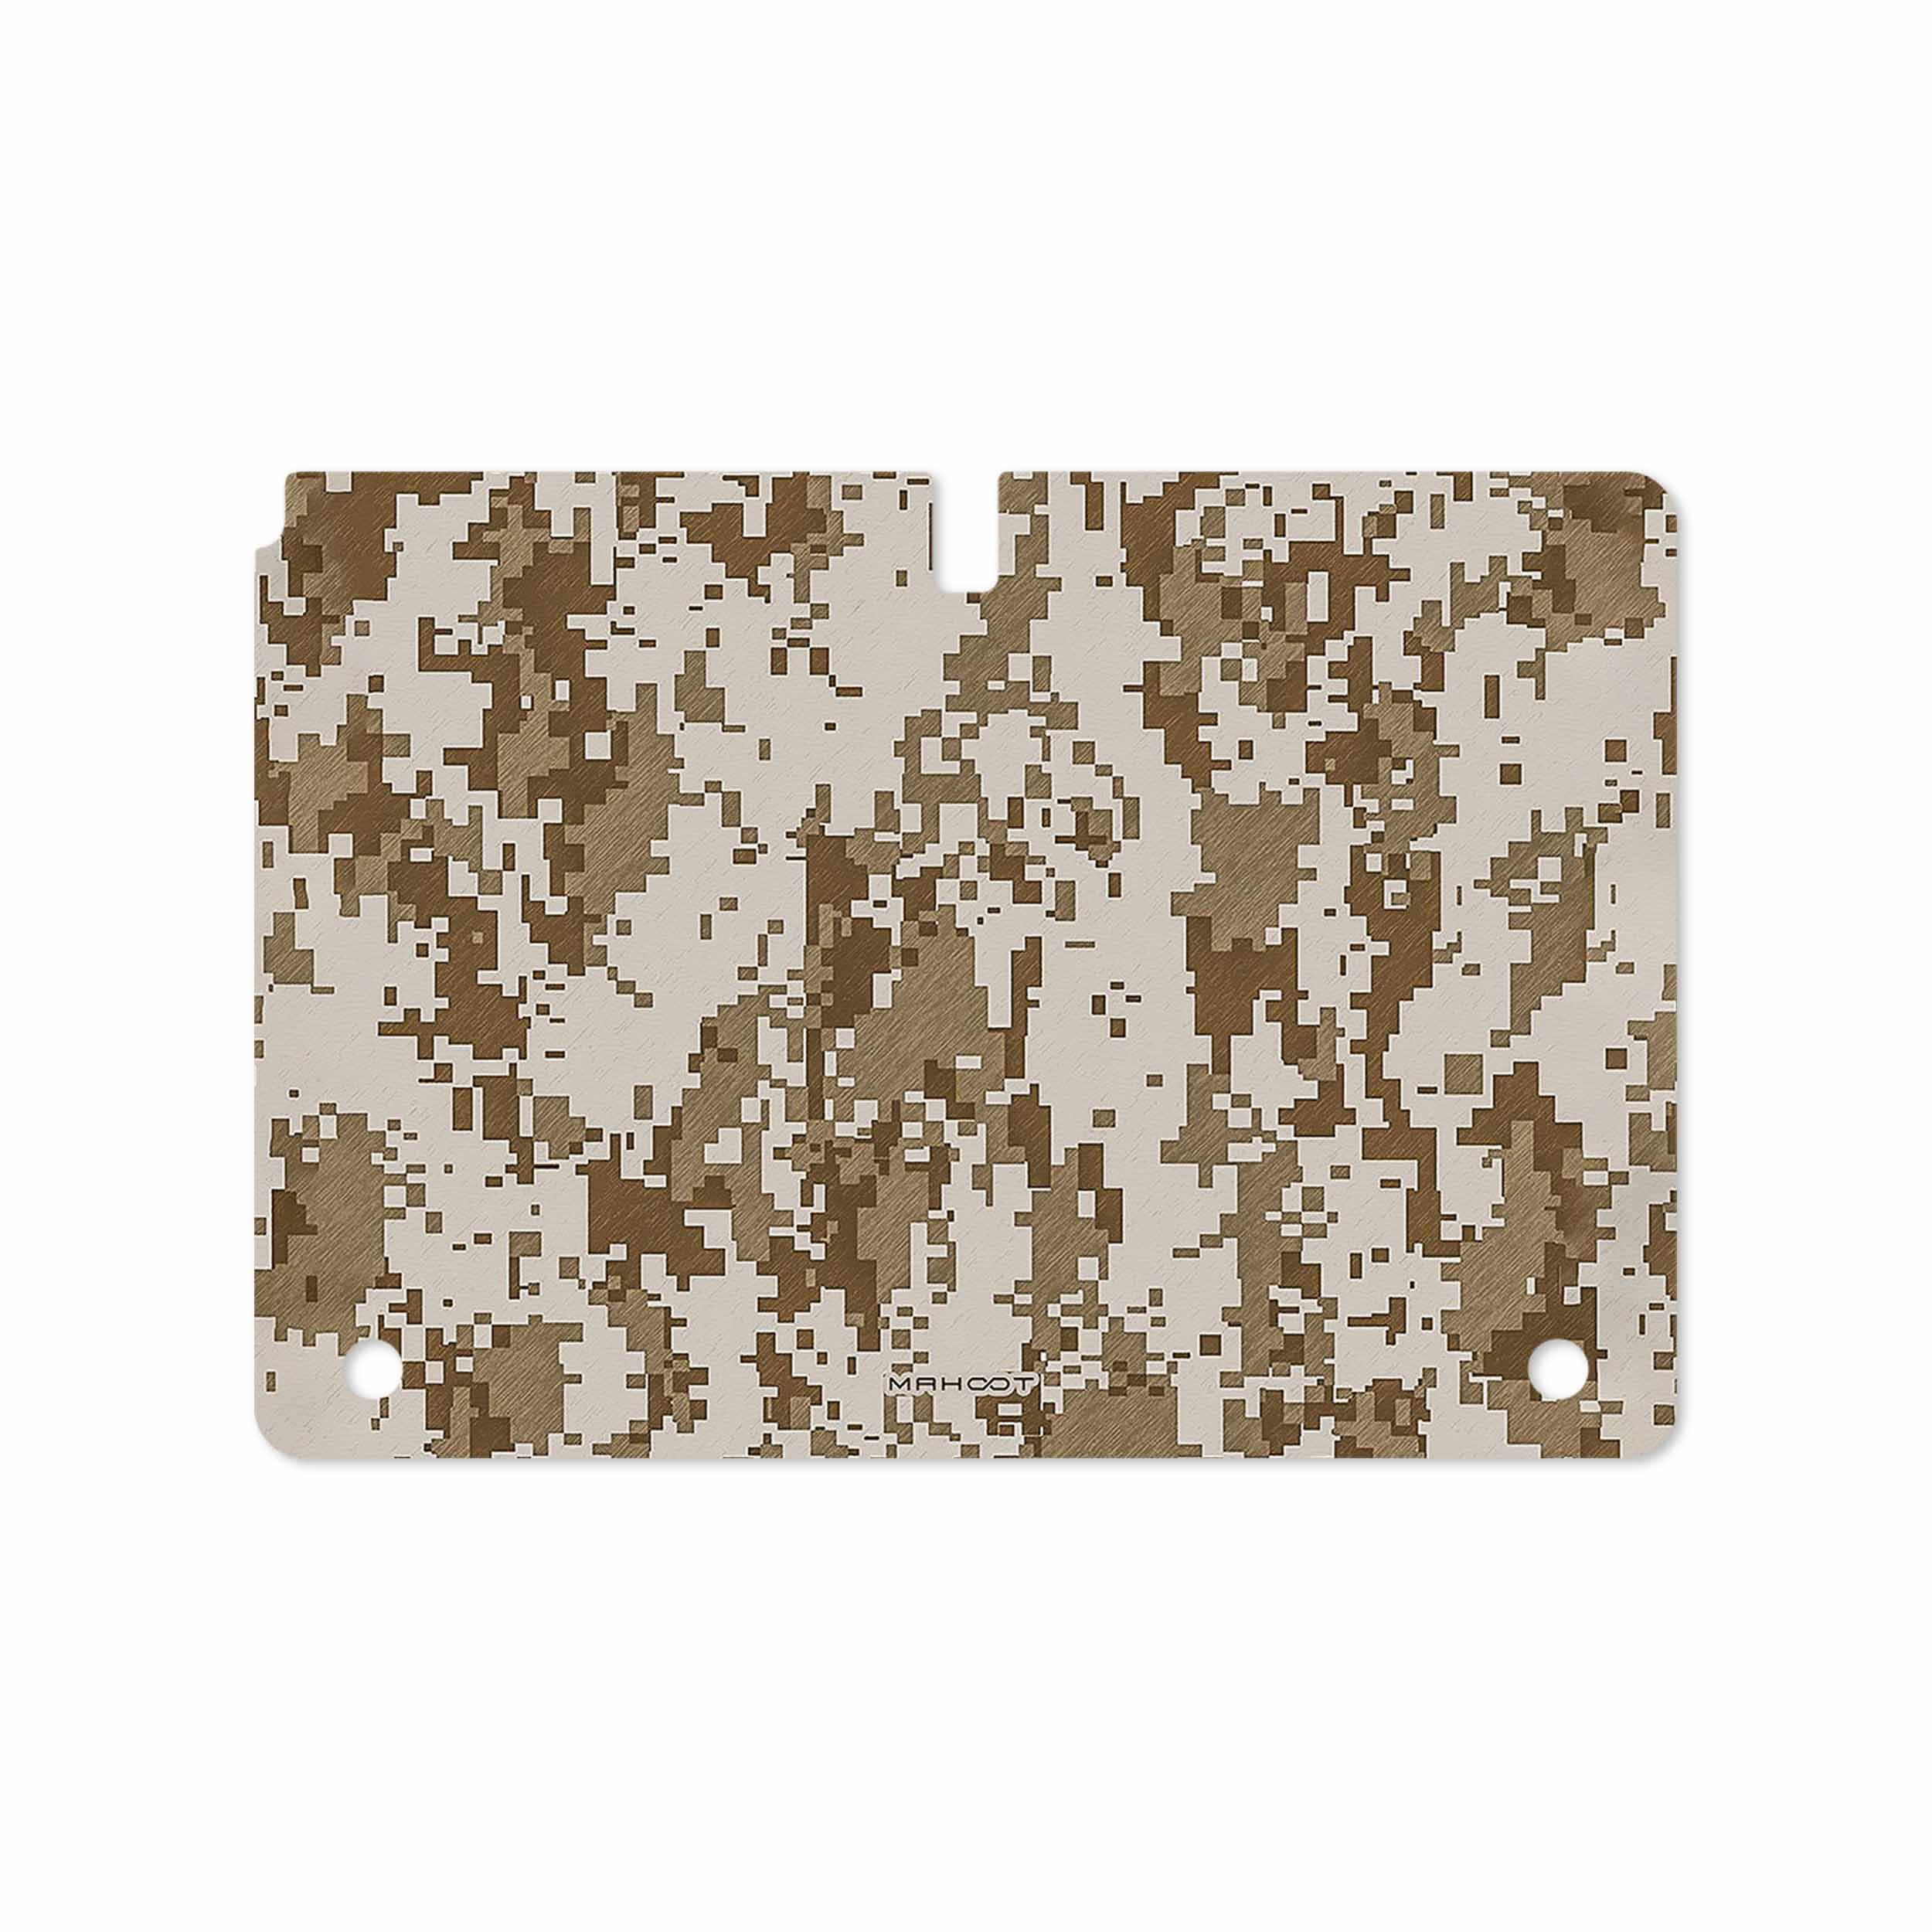 برچسب پوششی ماهوت مدل Army-Desert-Pixel مناسب برای تبلت سامسونگ Galaxy Note 10.1 2012 N8010